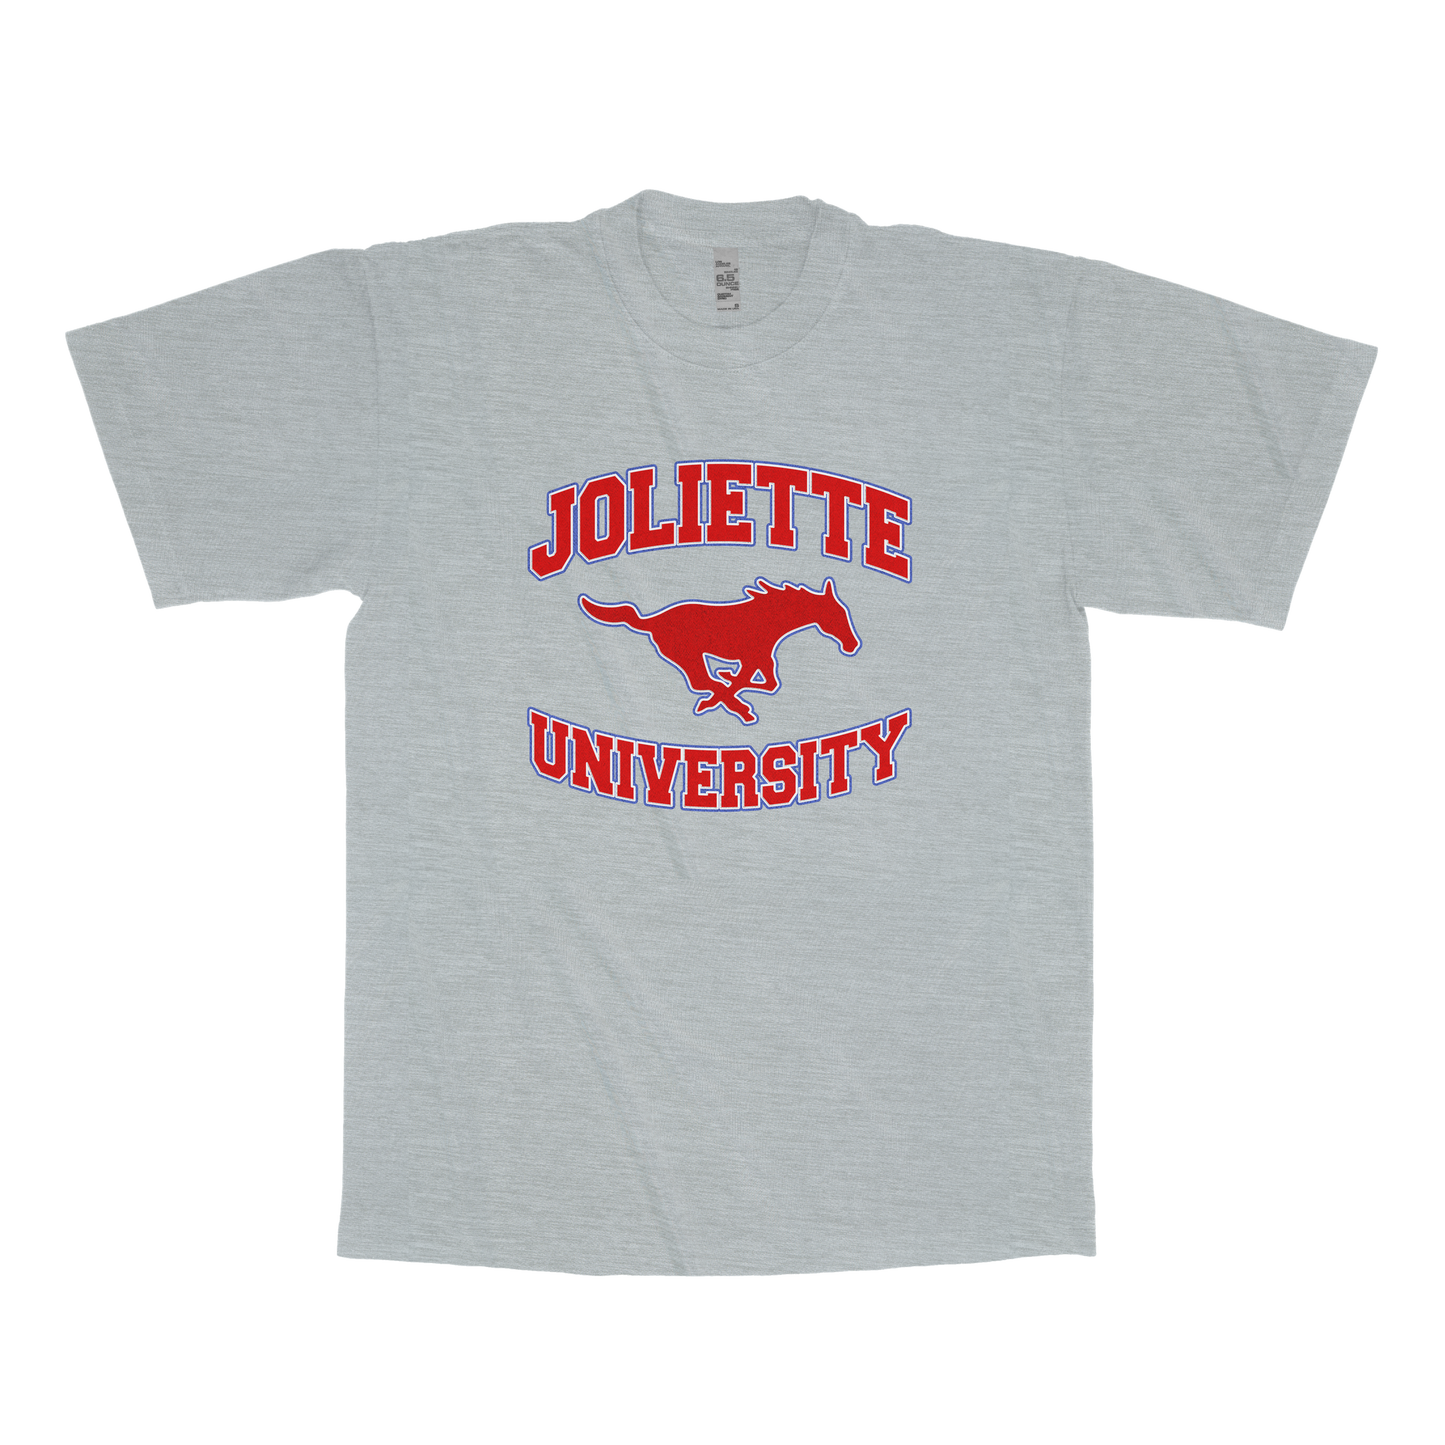 Joliette University (FAKE U)